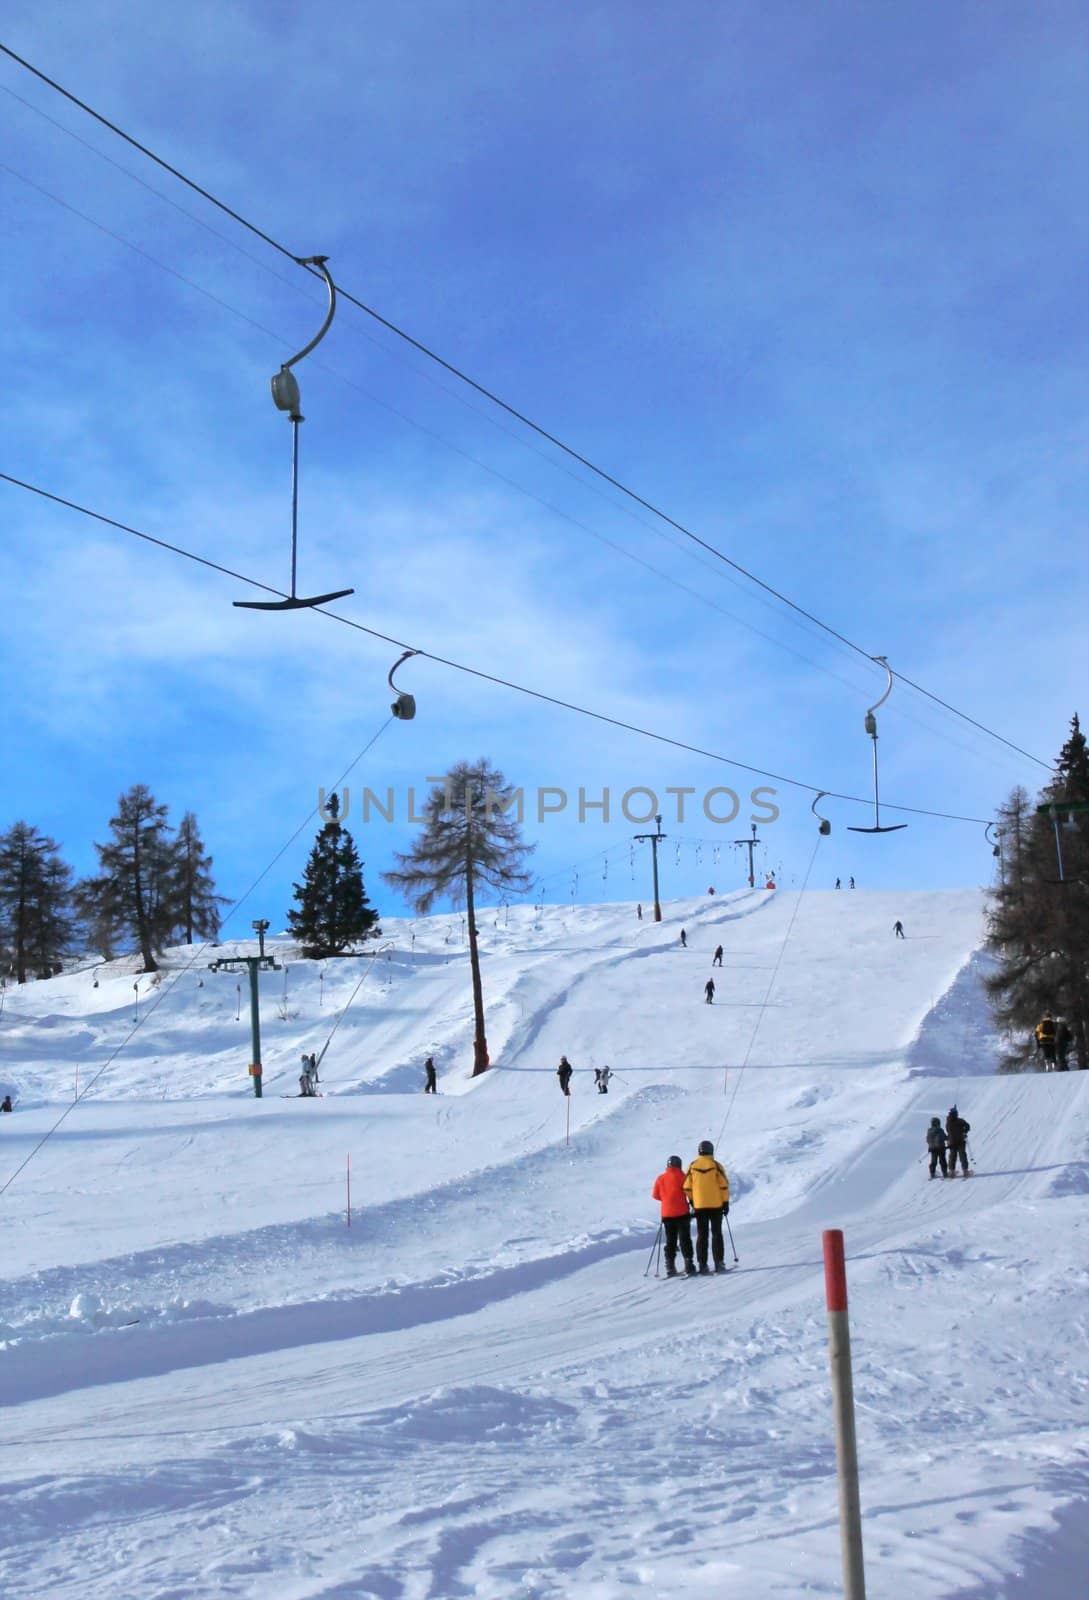 Ski tow in the Alps, Switzerland by Elenaphotos21